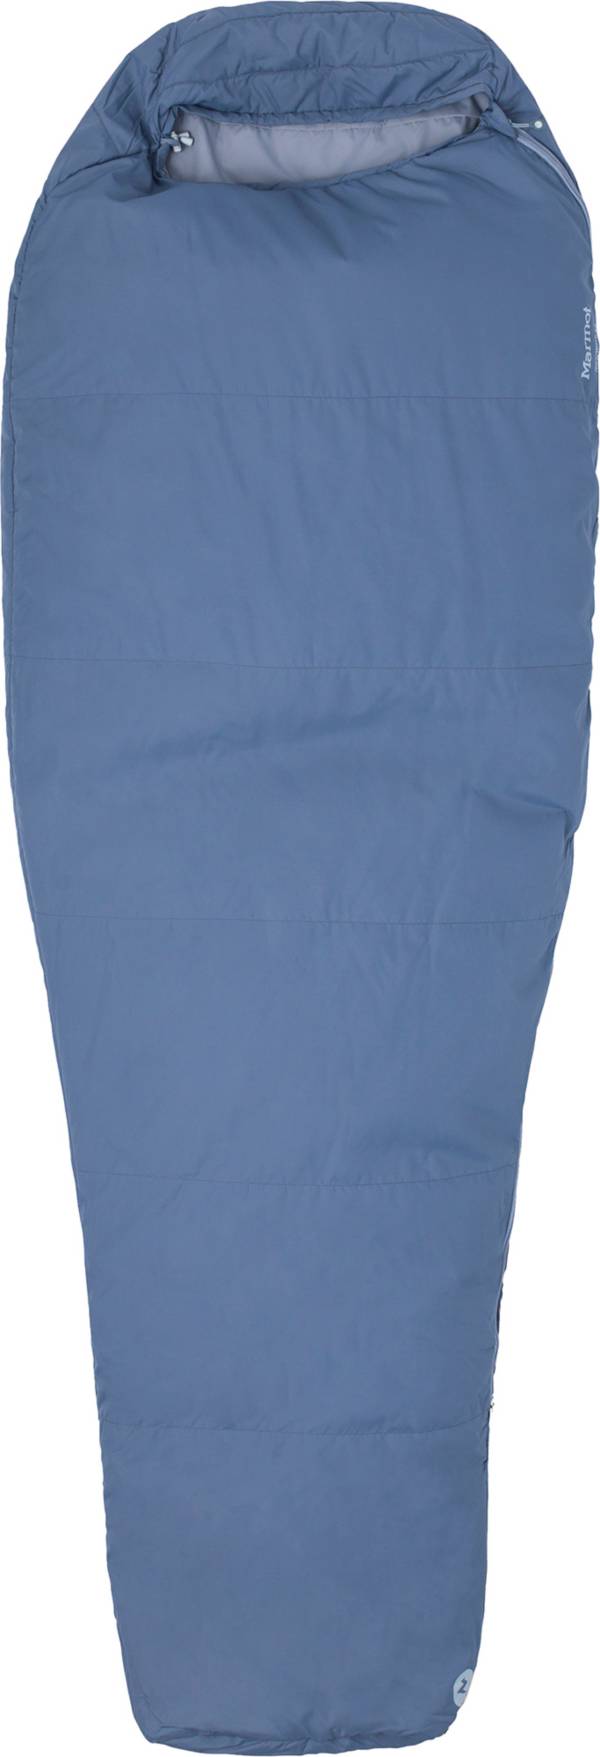 Marmot Nanowave 55 Sleeping Bag product image